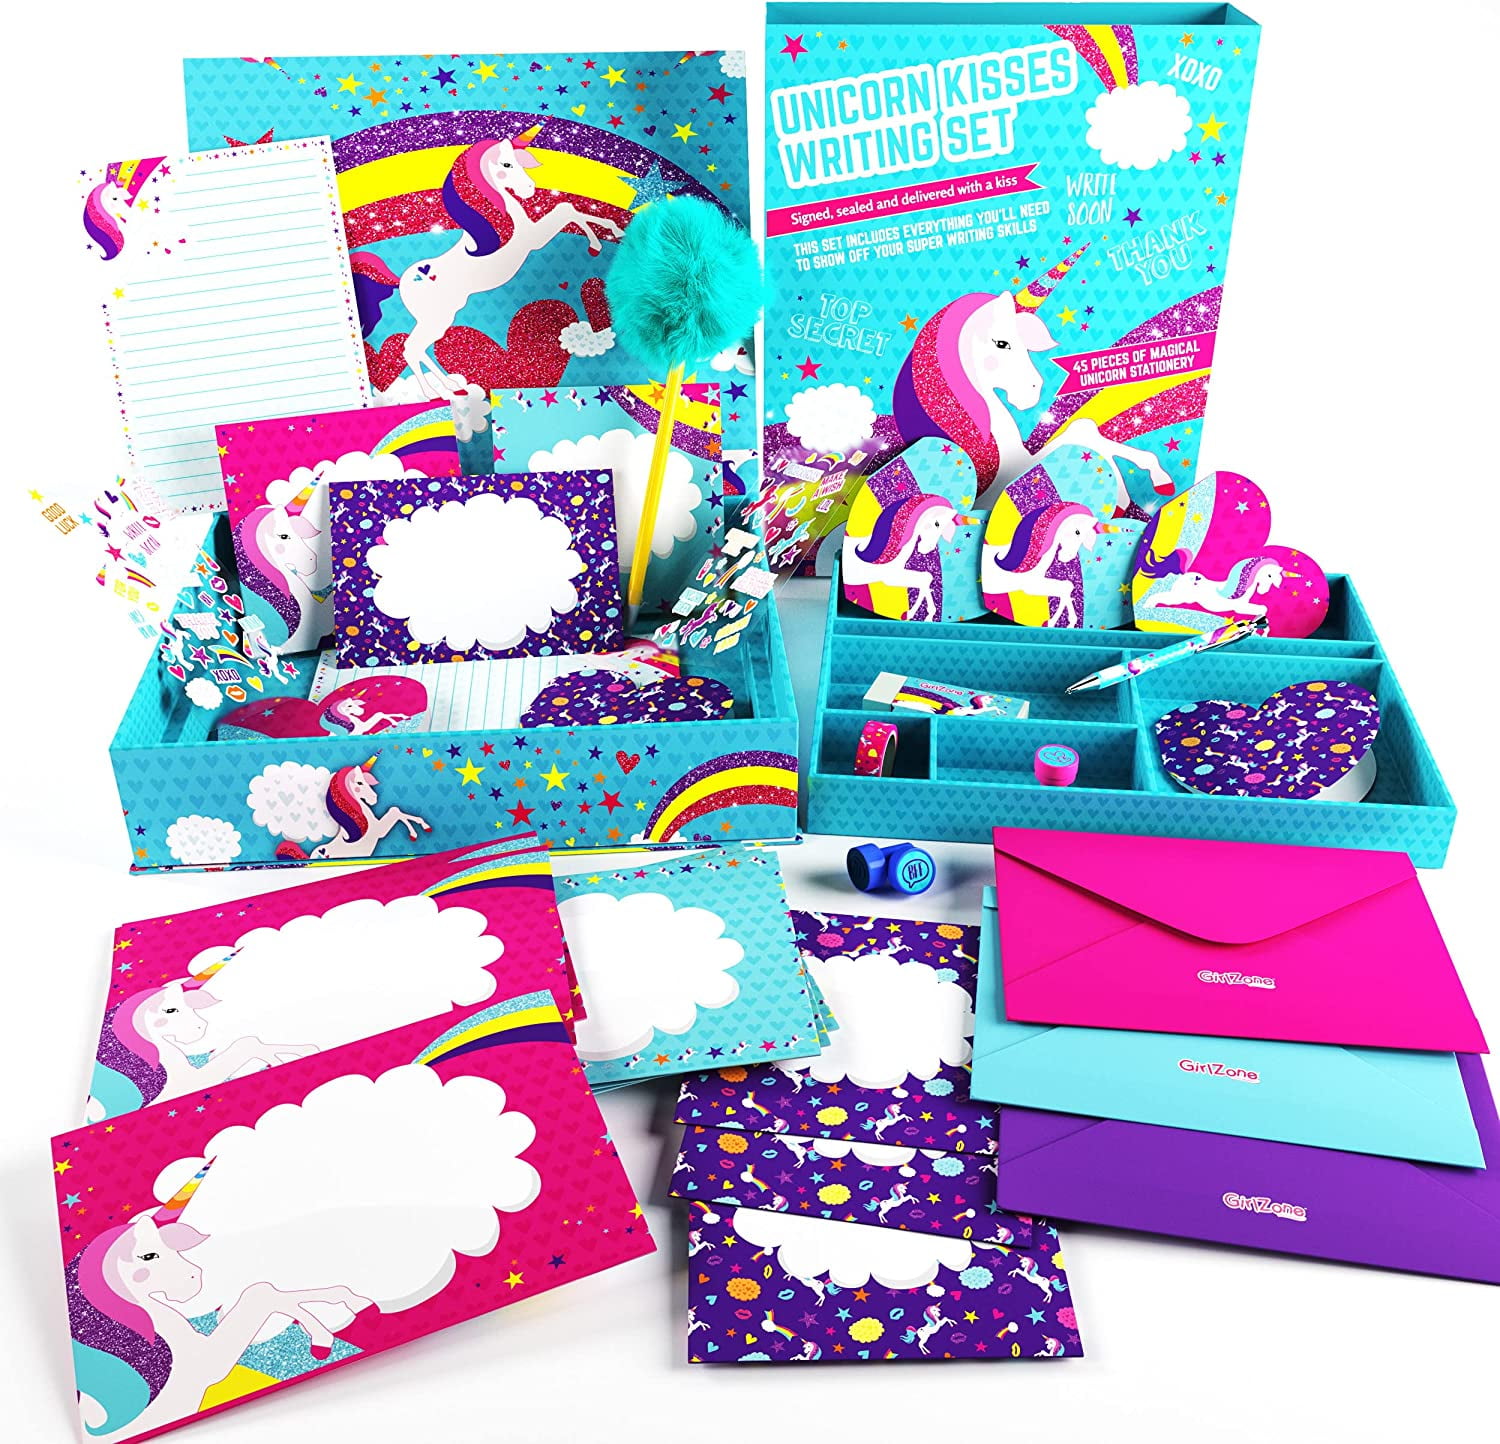 GirlZone Unicorn Letter Writing Set For Girls, 45 Piece Stationery